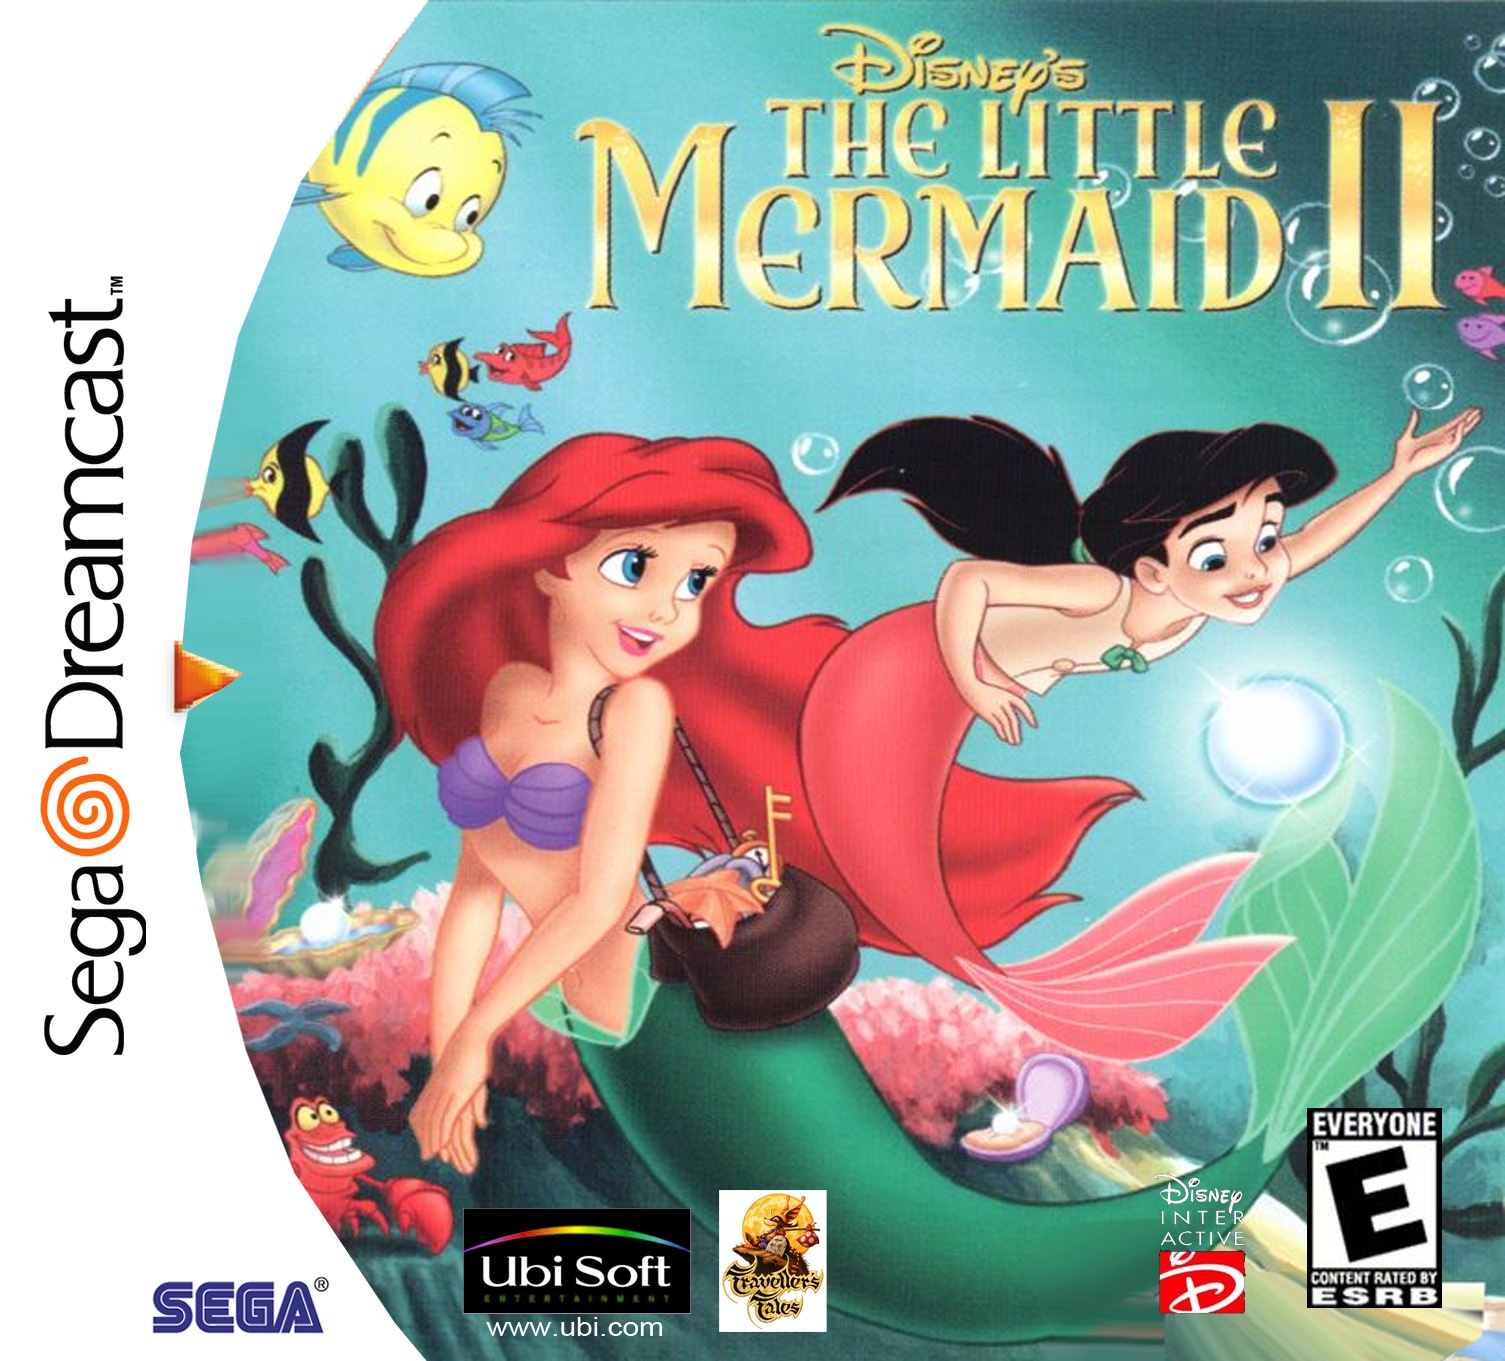 The Little Mermaid 2 box cover